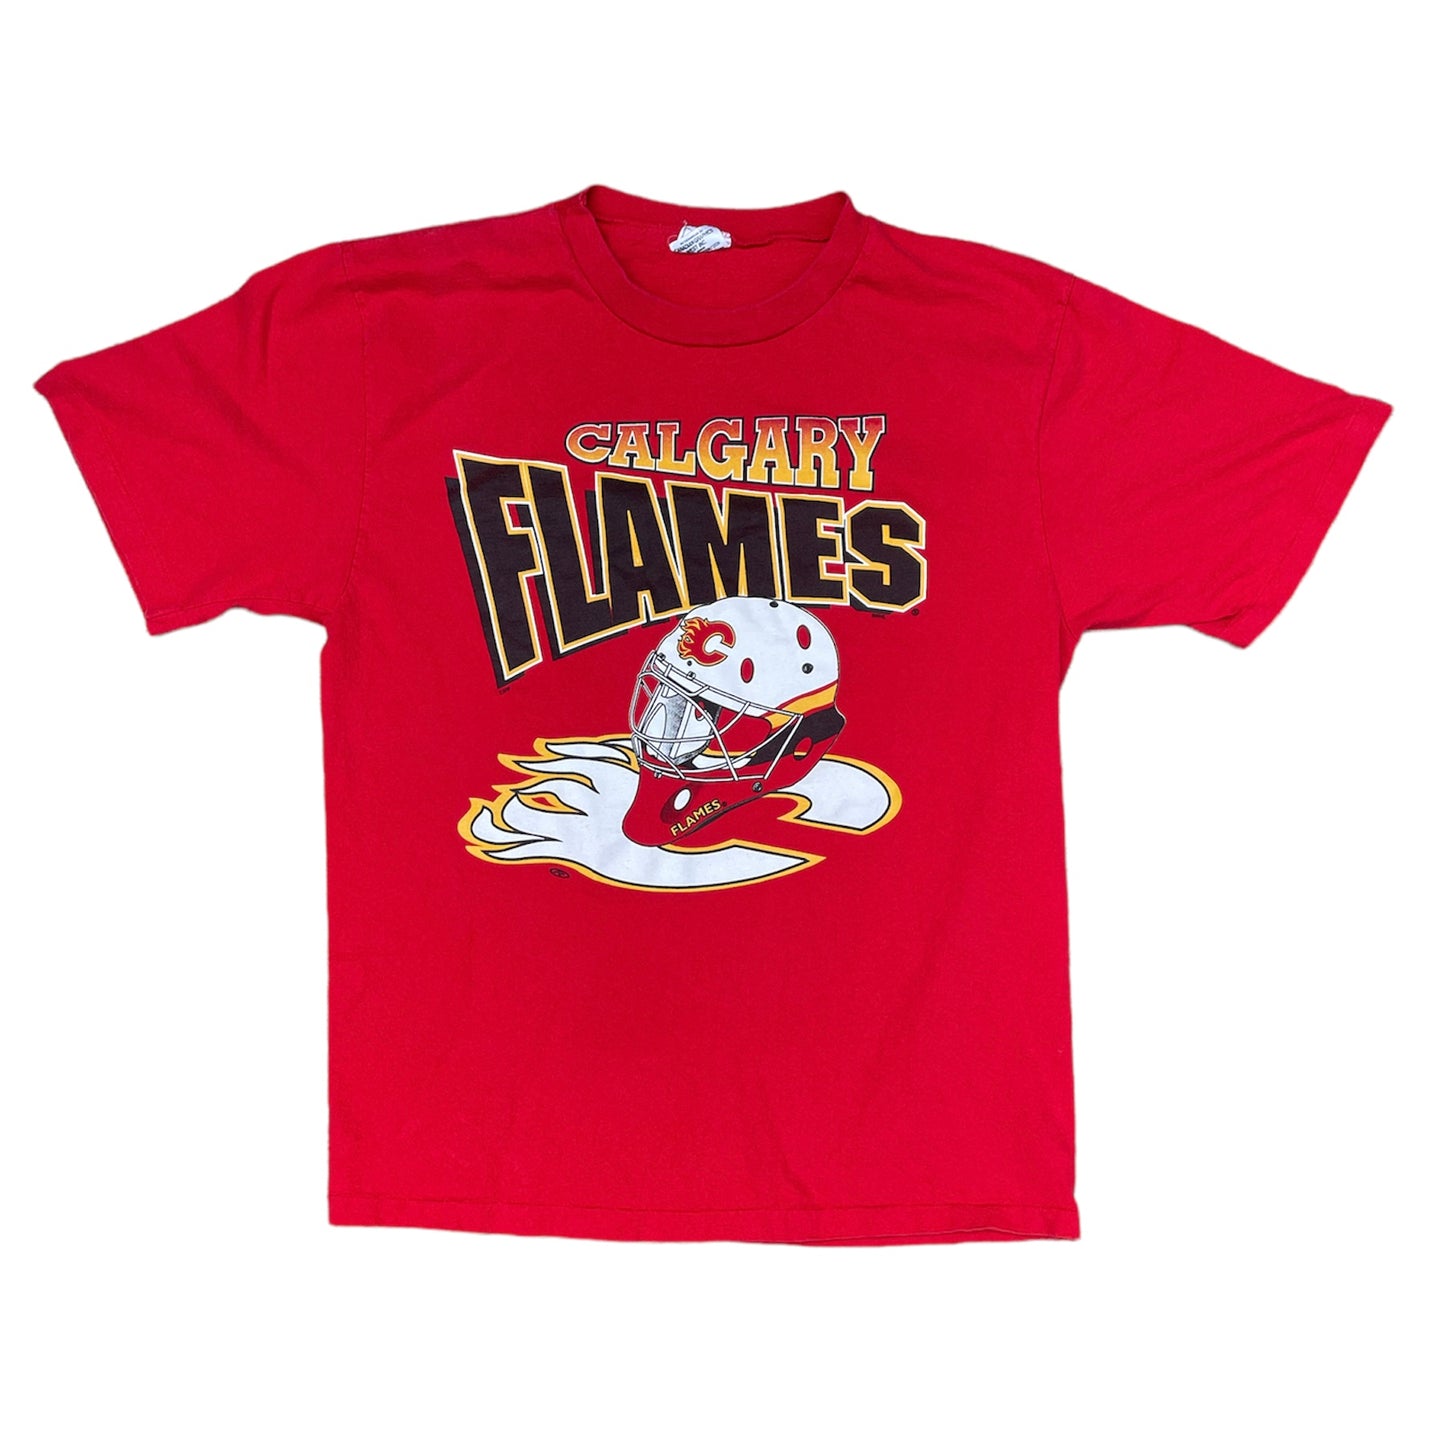 Vintage Calgary Flames T-shirt